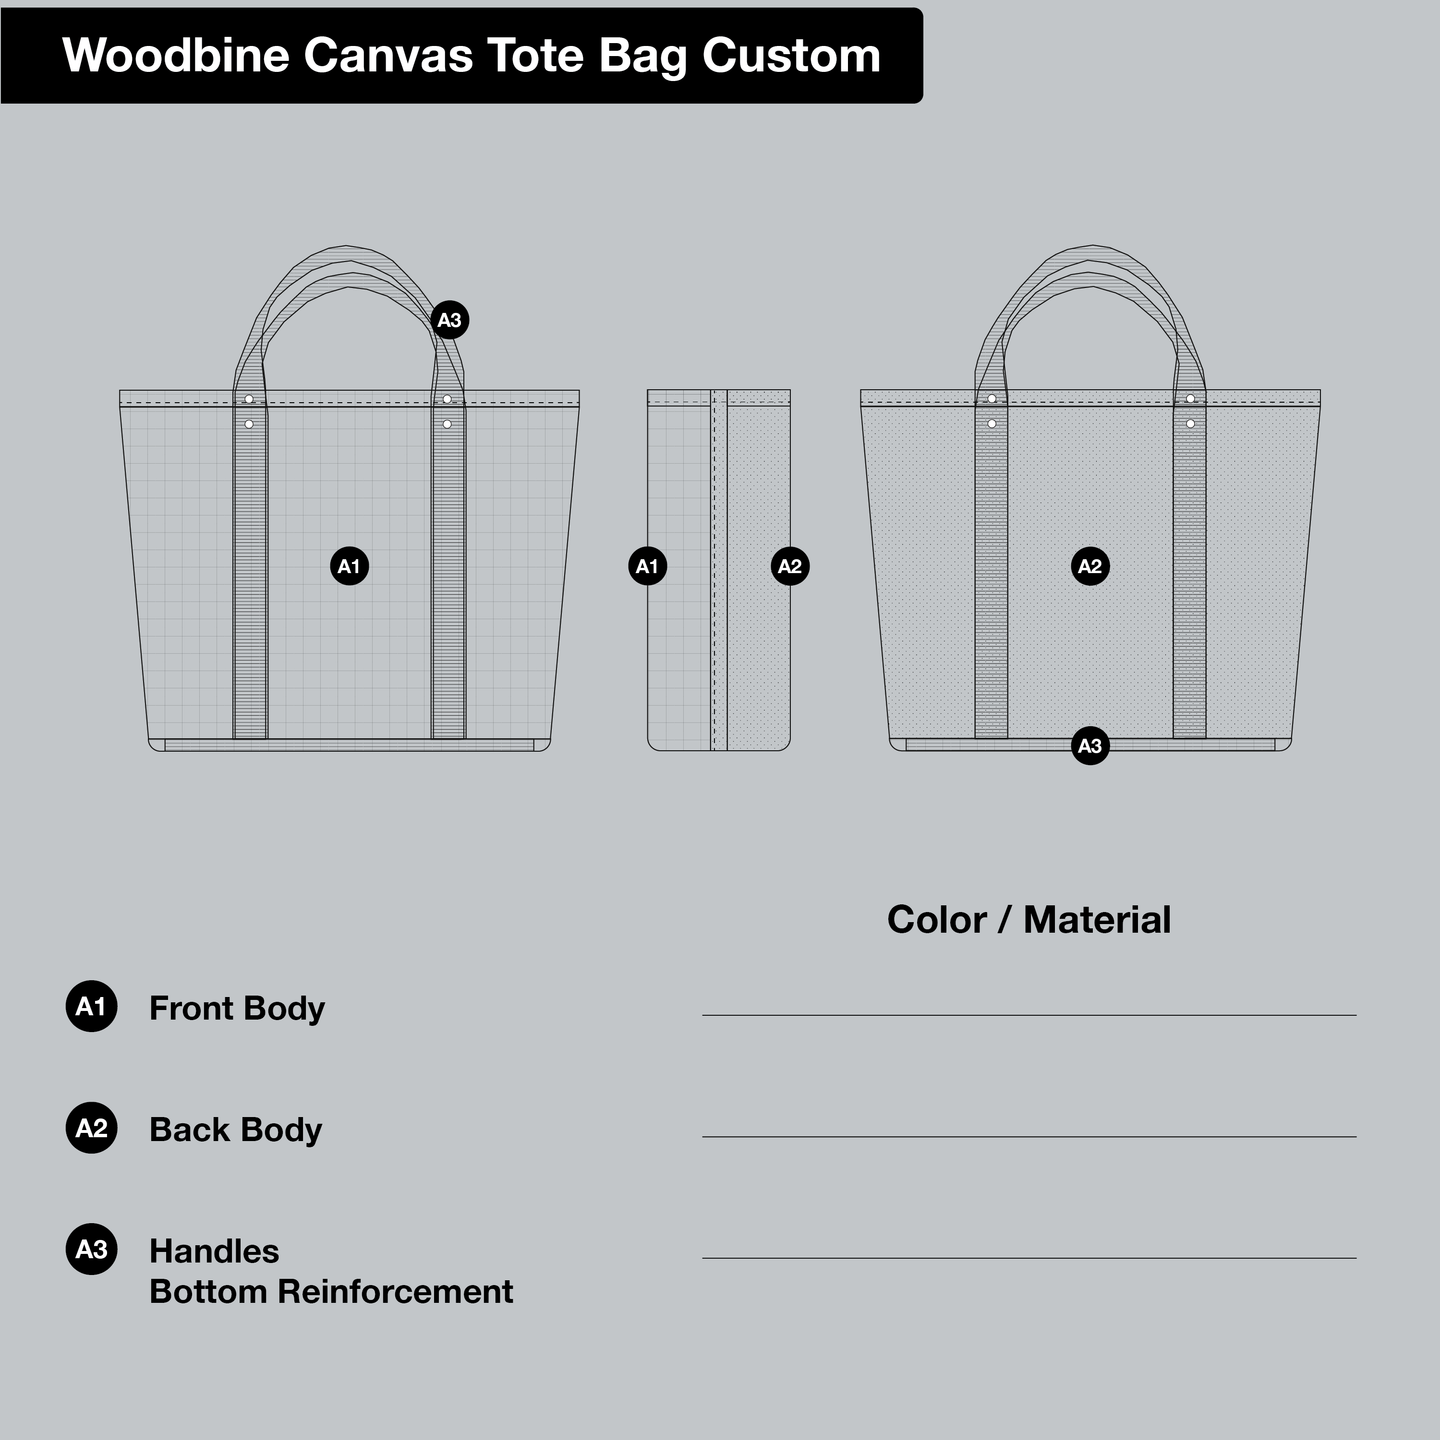 Woodbine Canvas Tote Bag Custom